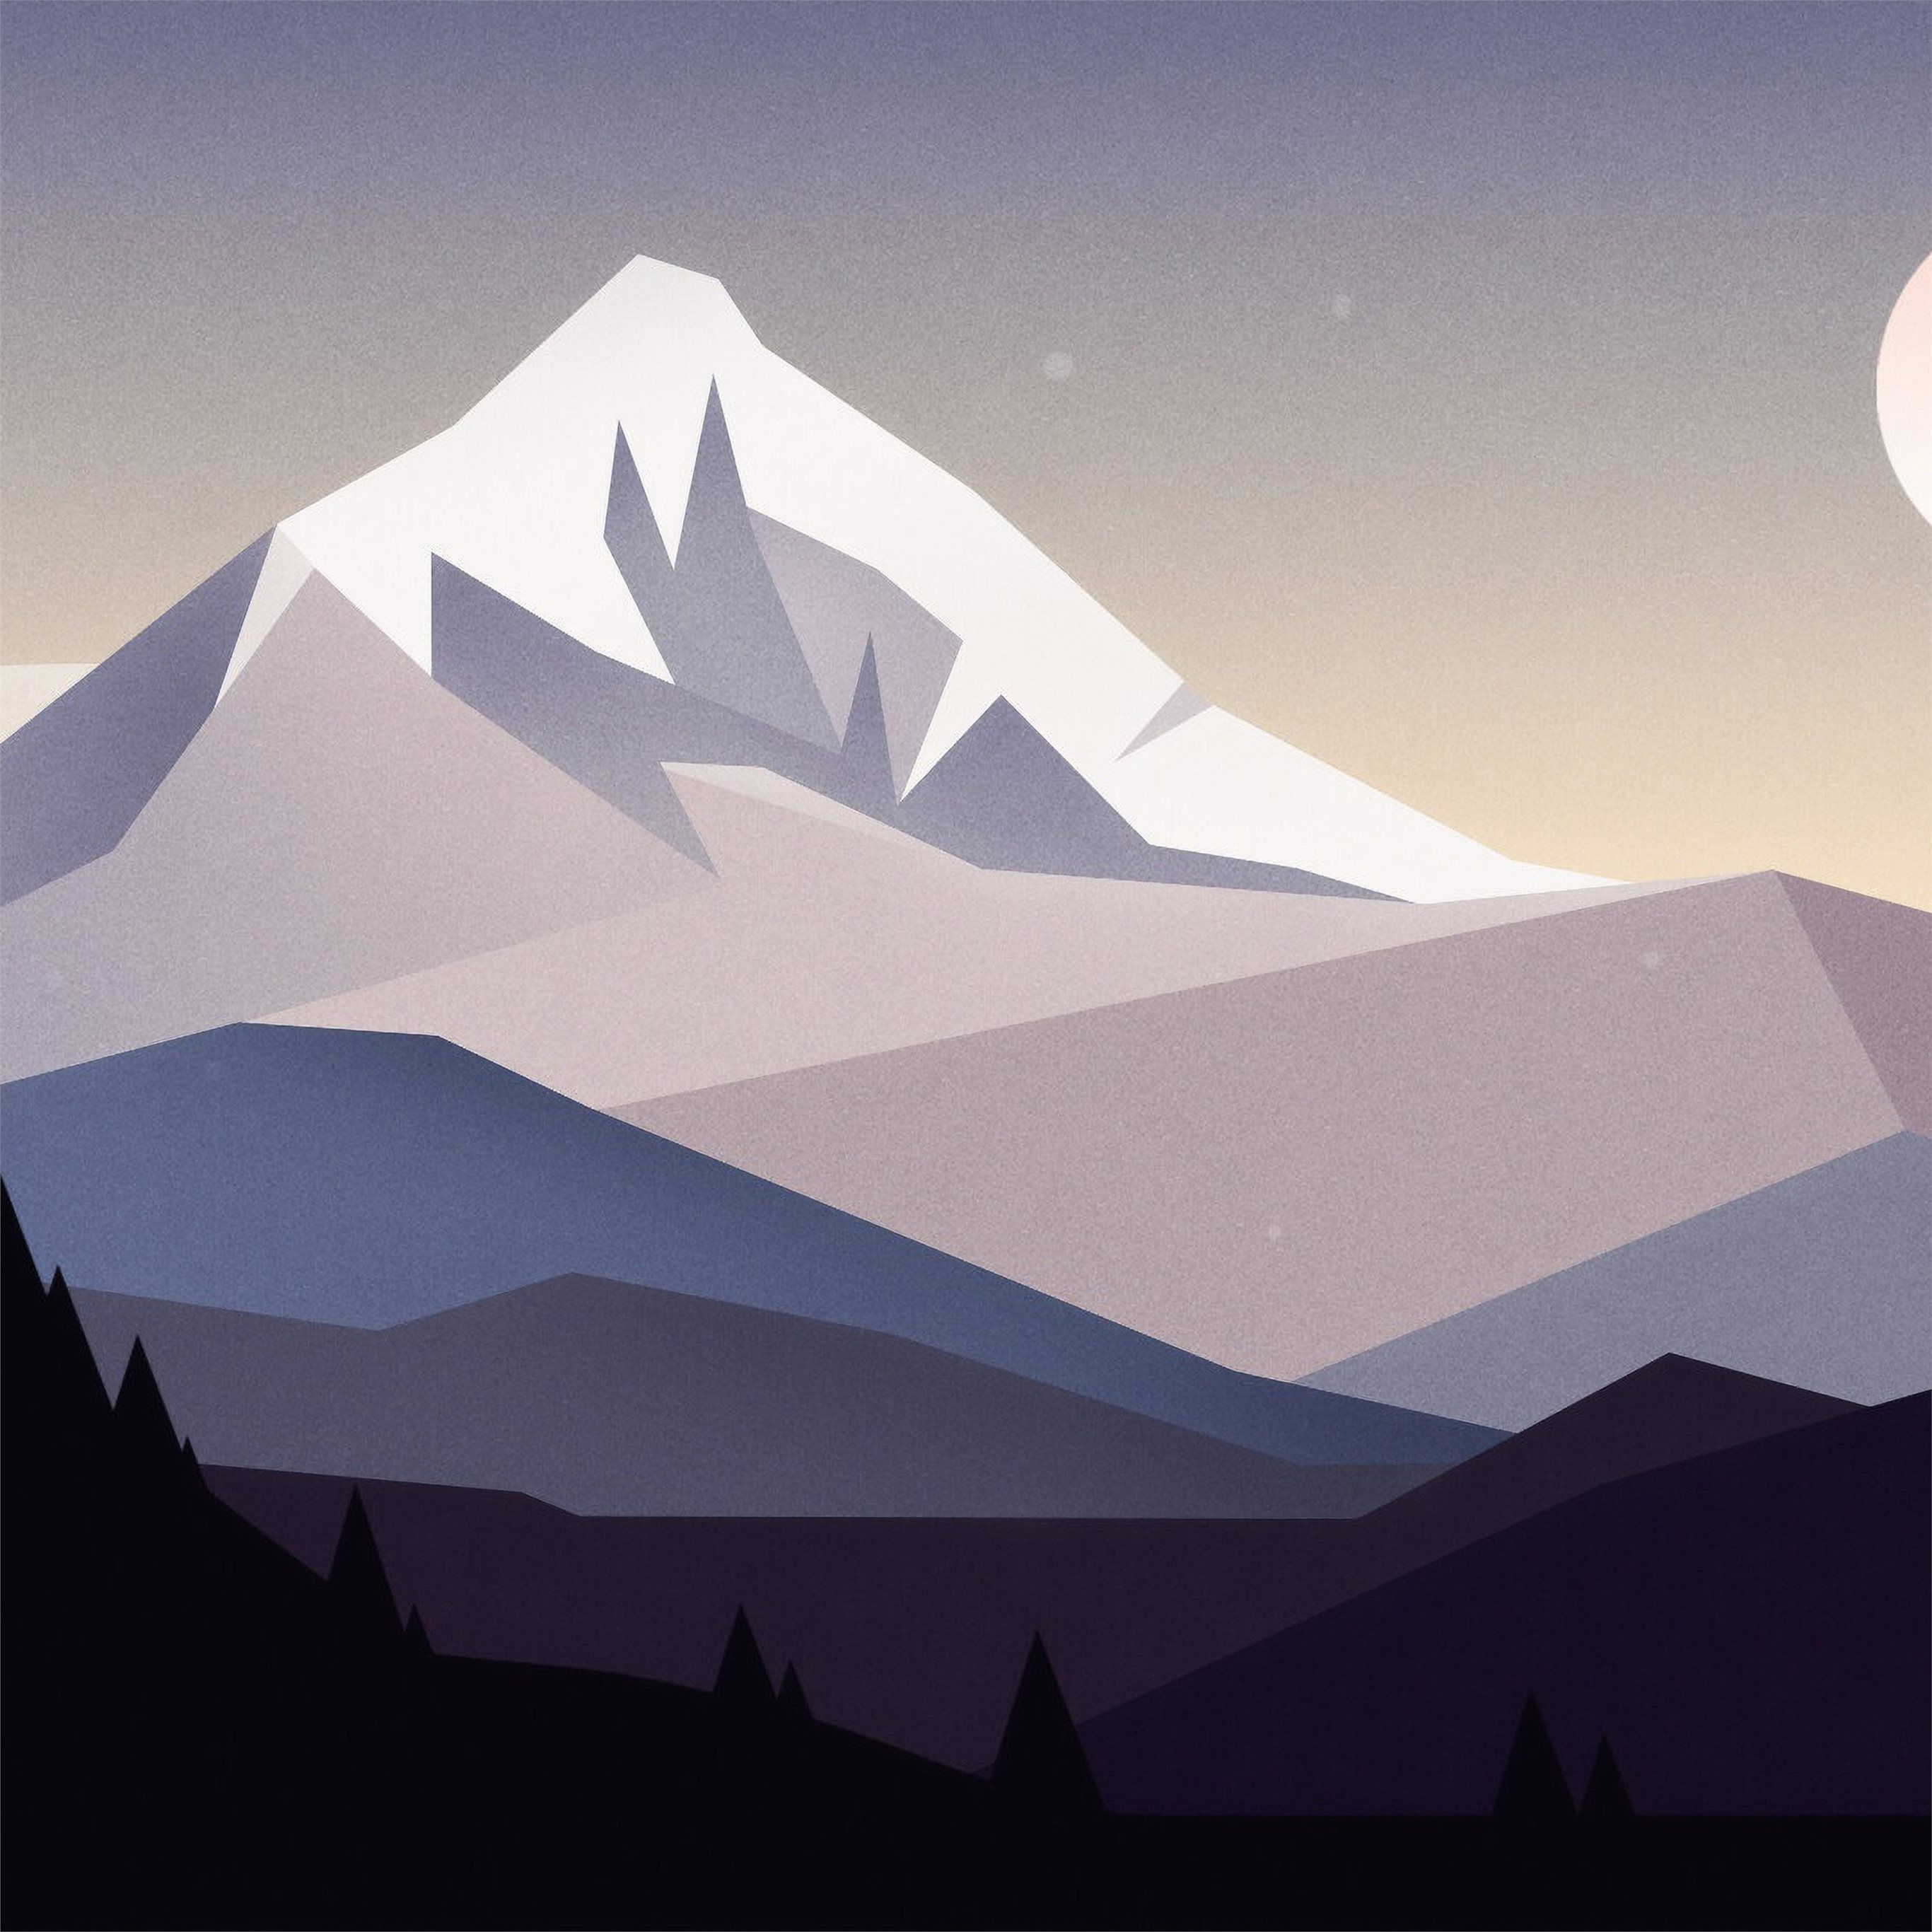 minimal mountains landscape 4k iPad Pro Wallpaper Free Download